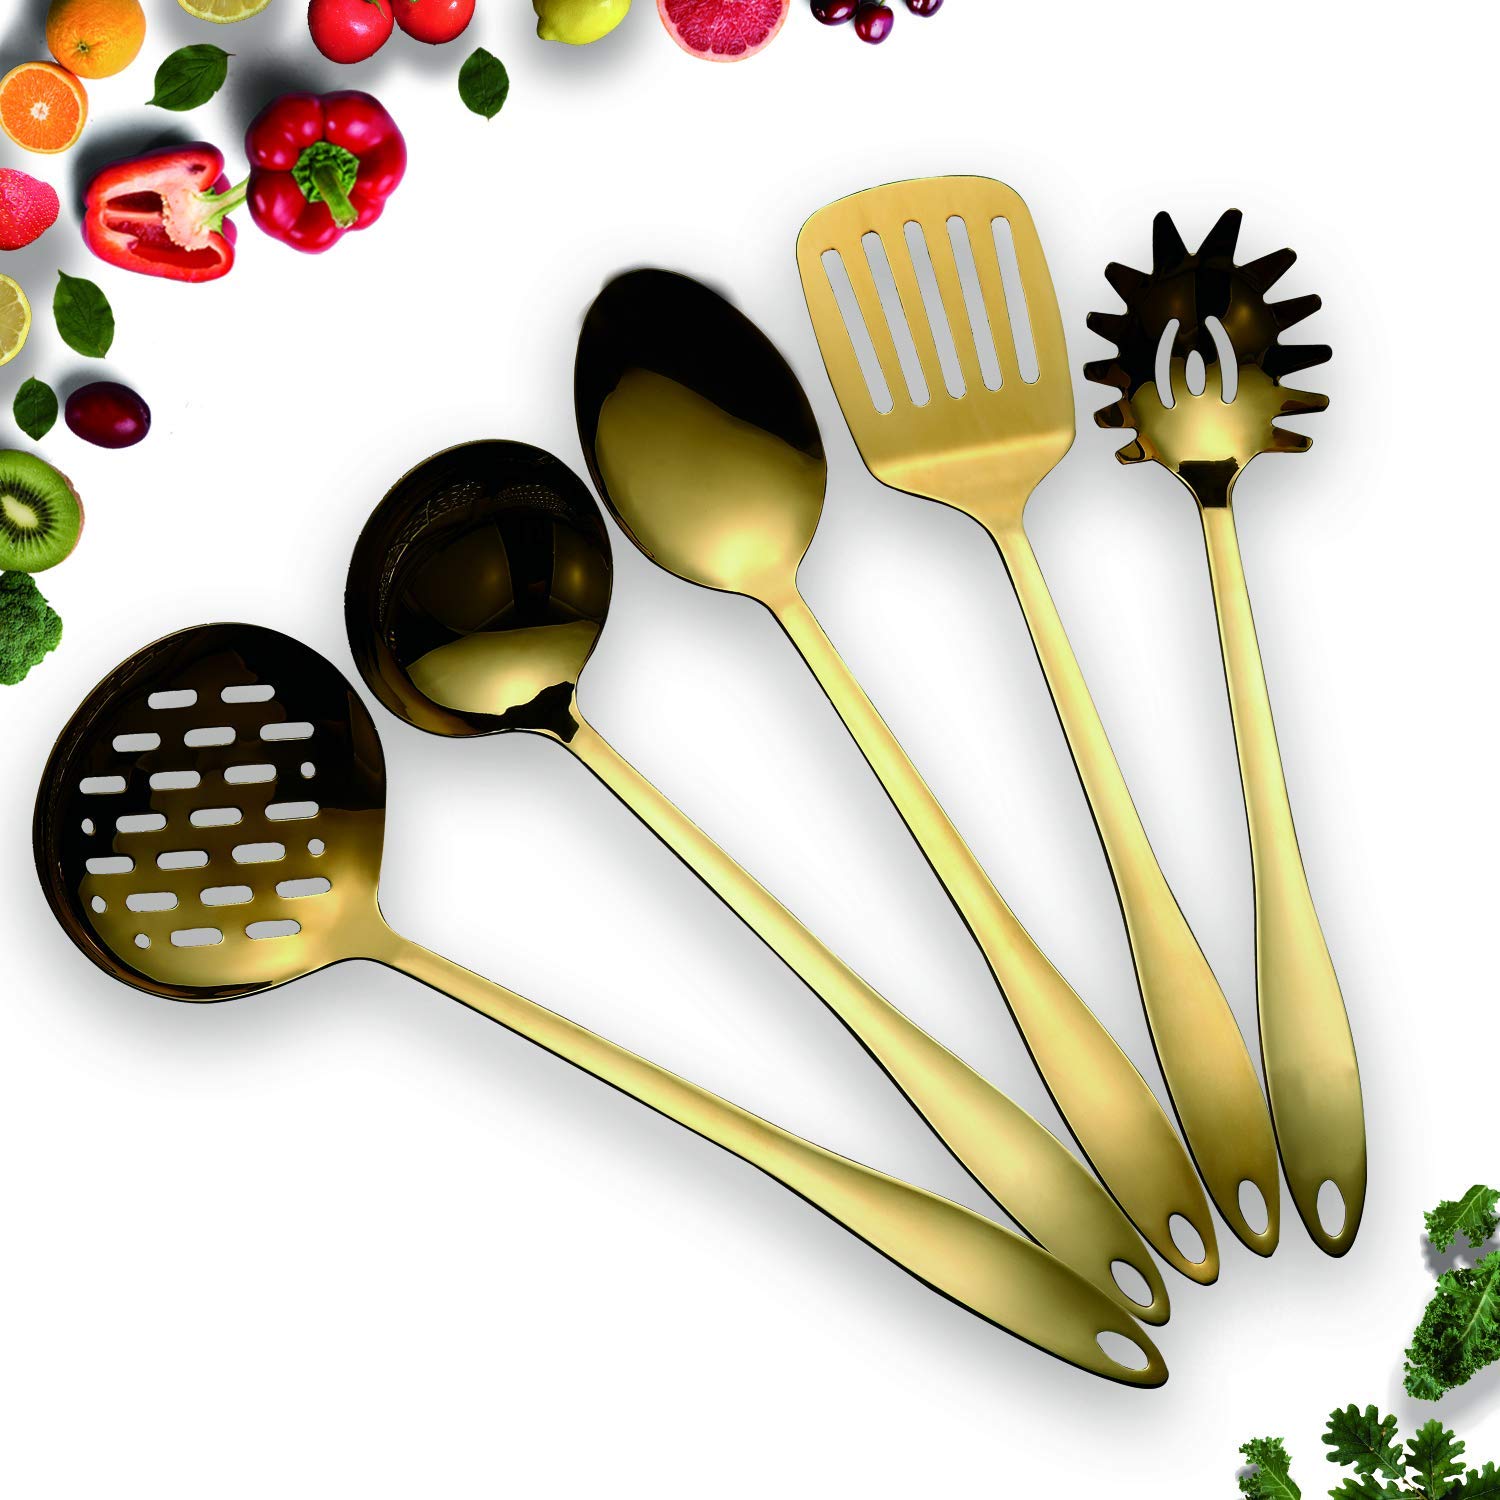 Berglander KT108 Rose gold Stainless steel kitchen utensils set